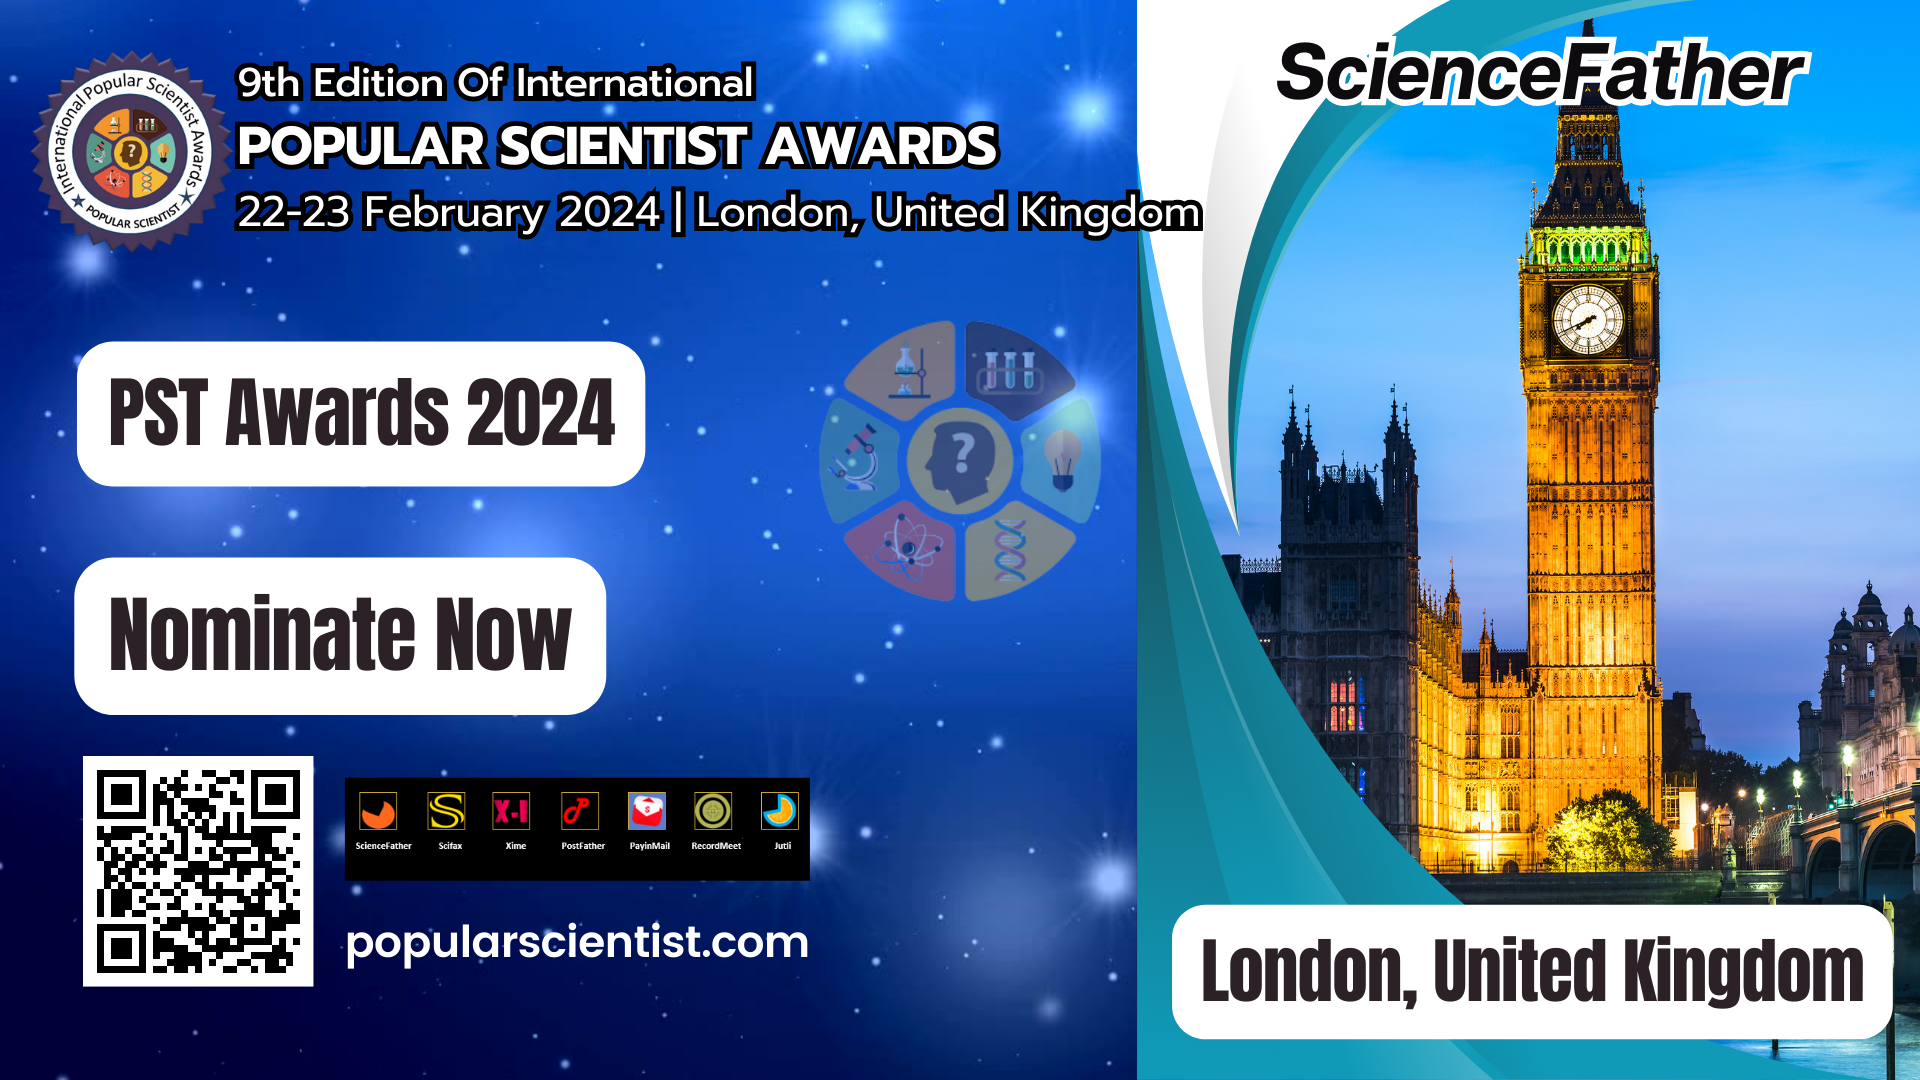 9th Edition of International Popular Scientist Awards, Online Event